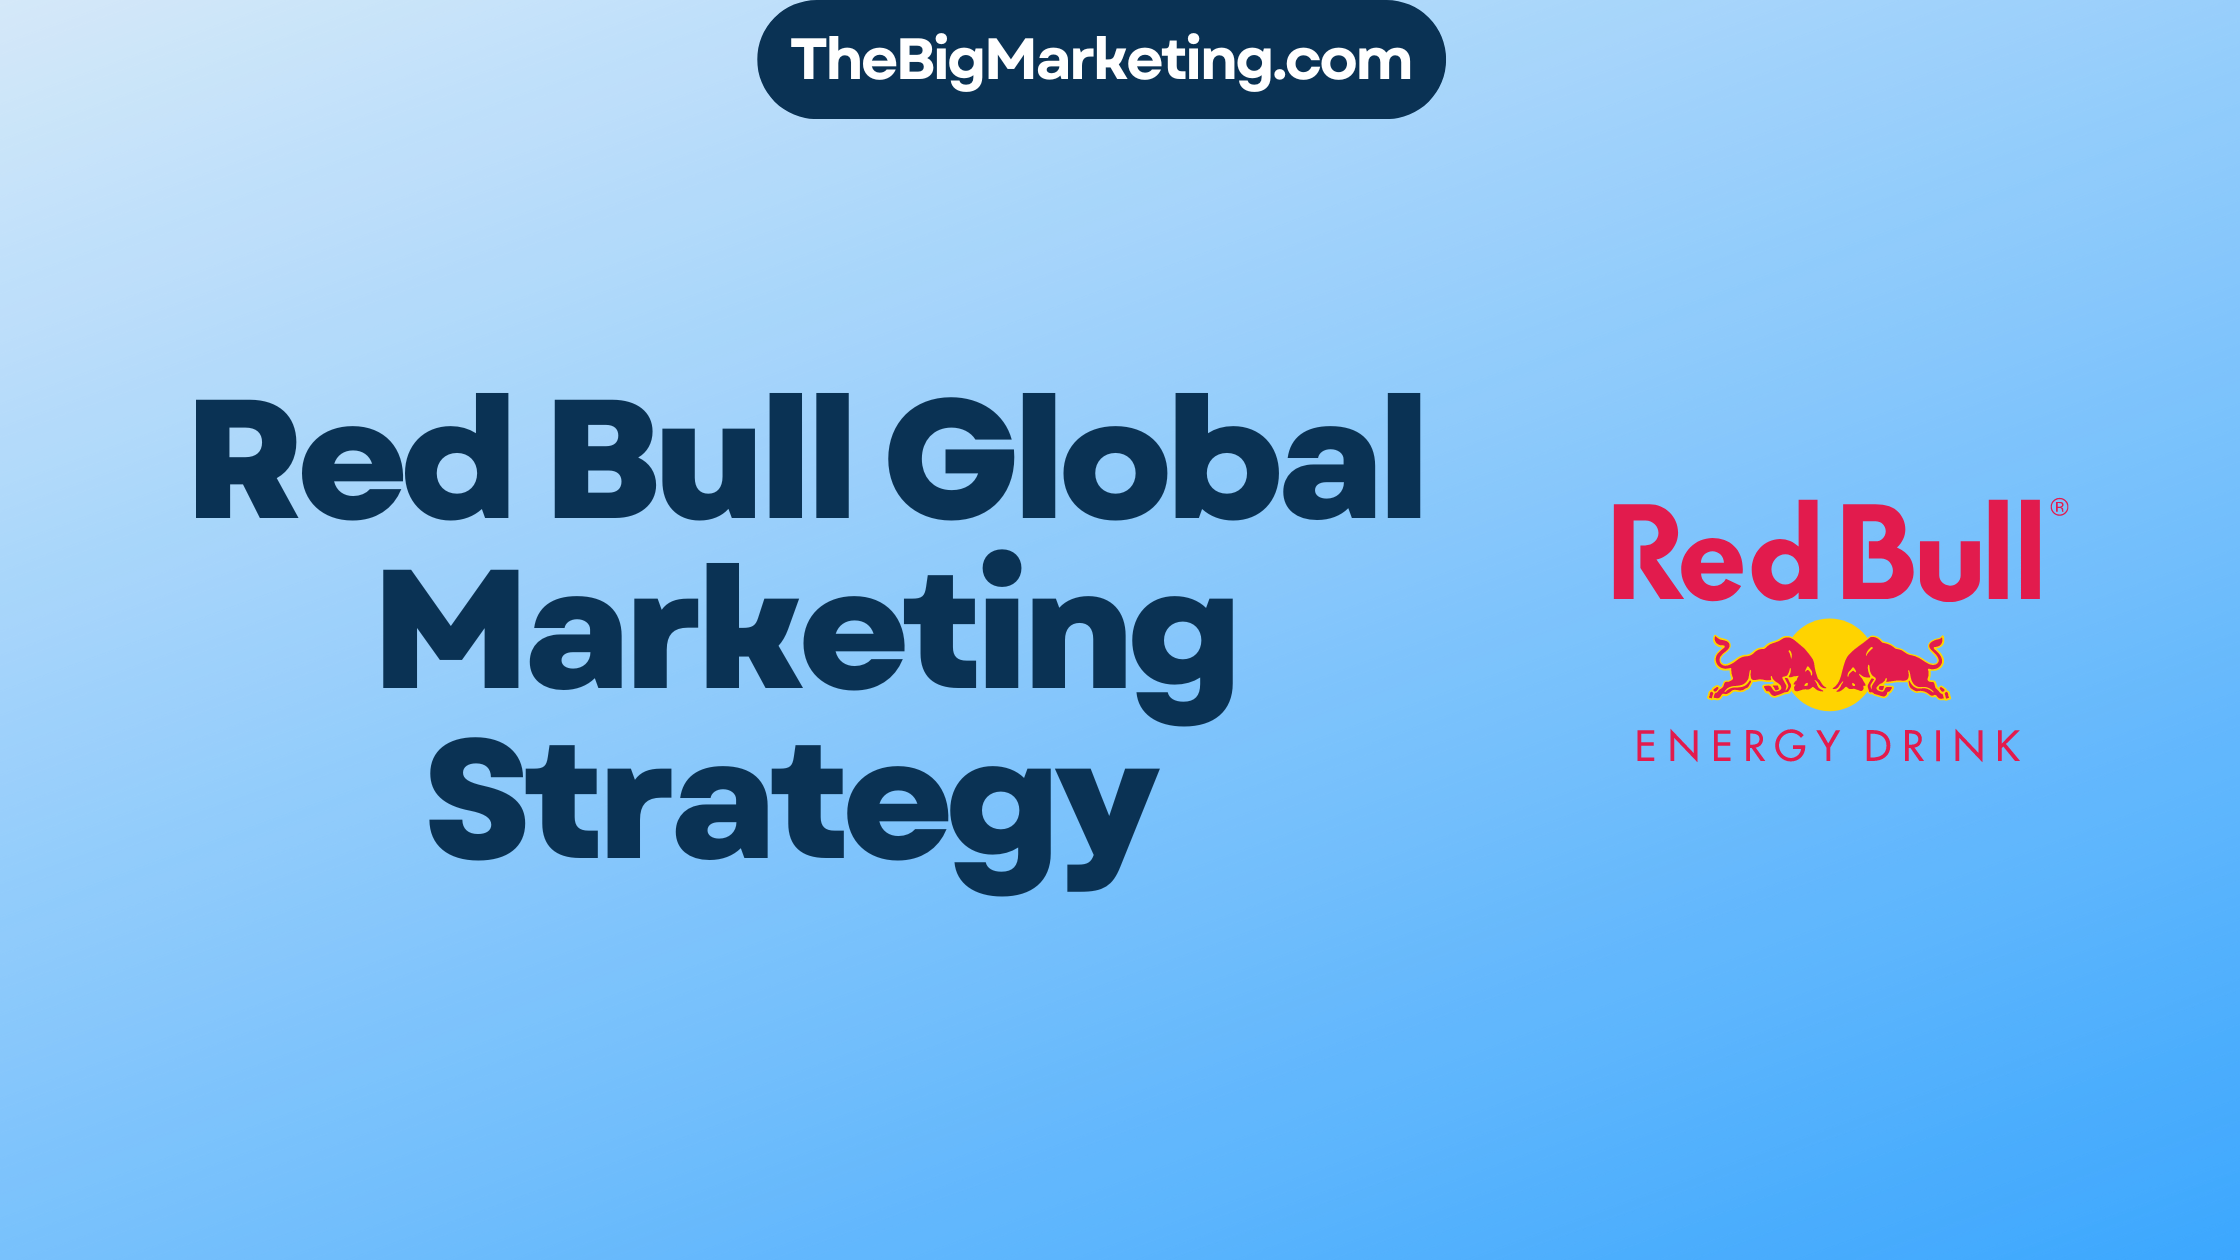 Red Bull Global Marketing Strategy